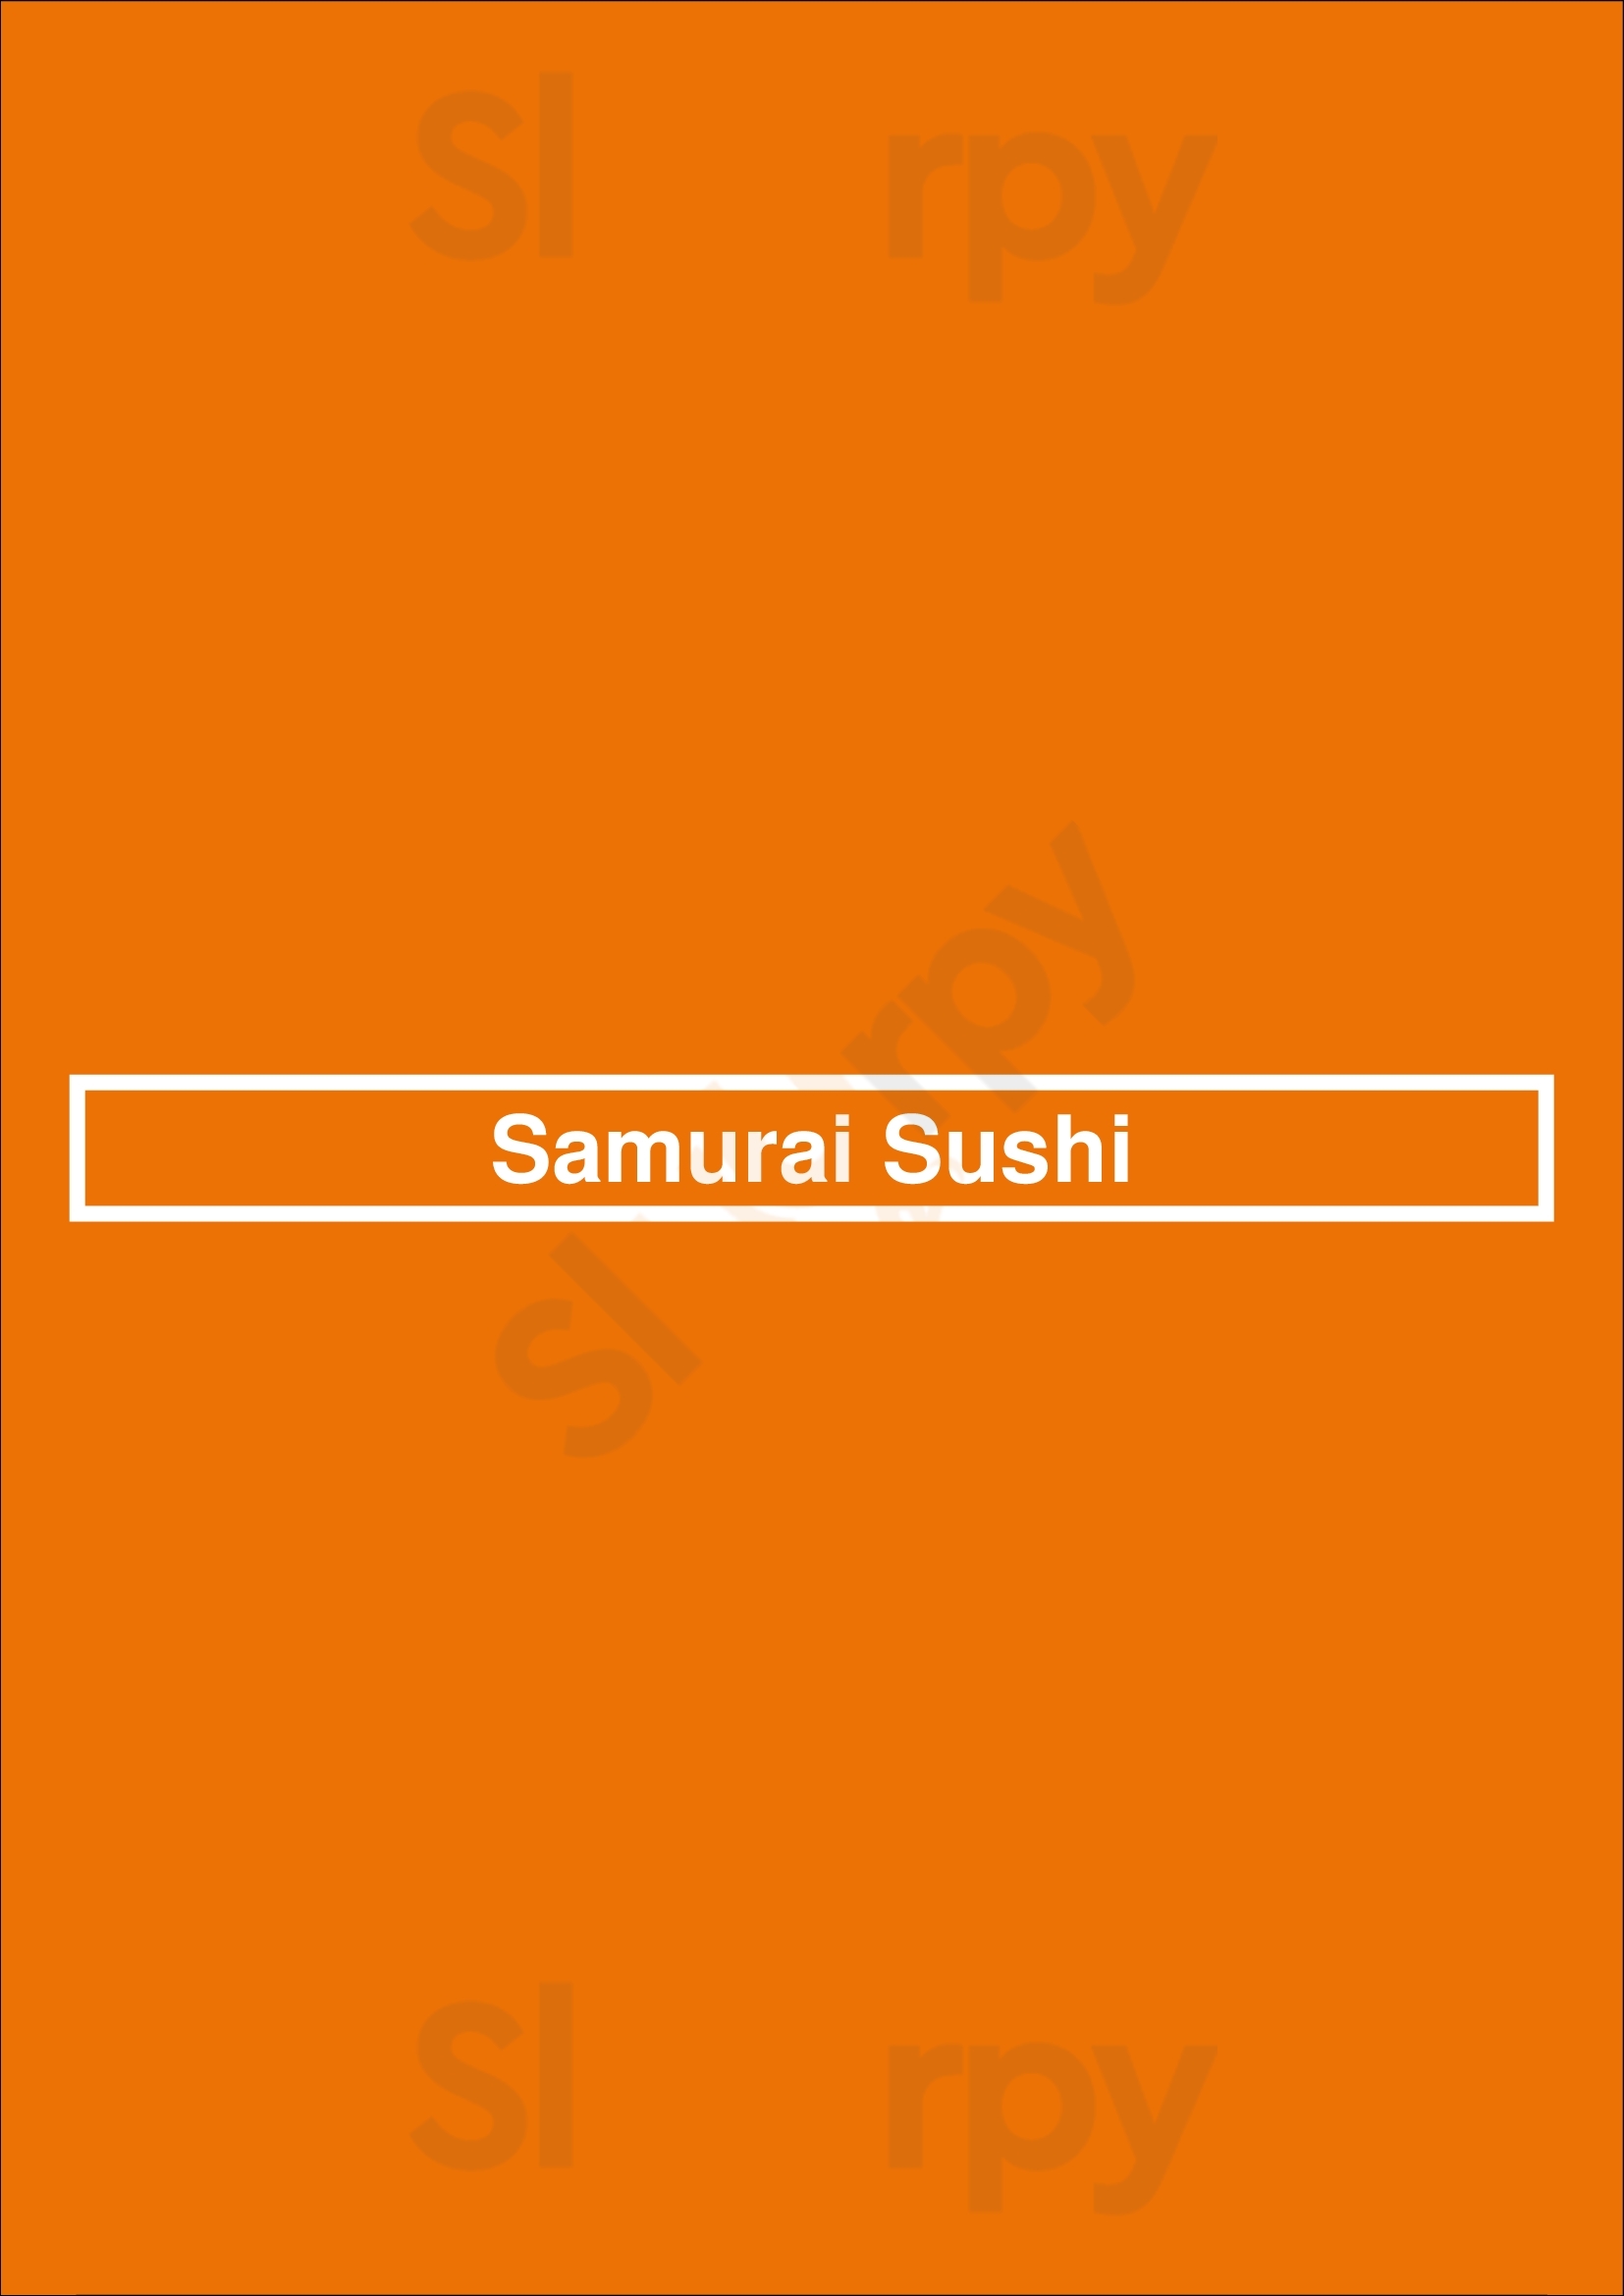 Samurai Sushi Ramos Mejía Menu - 1